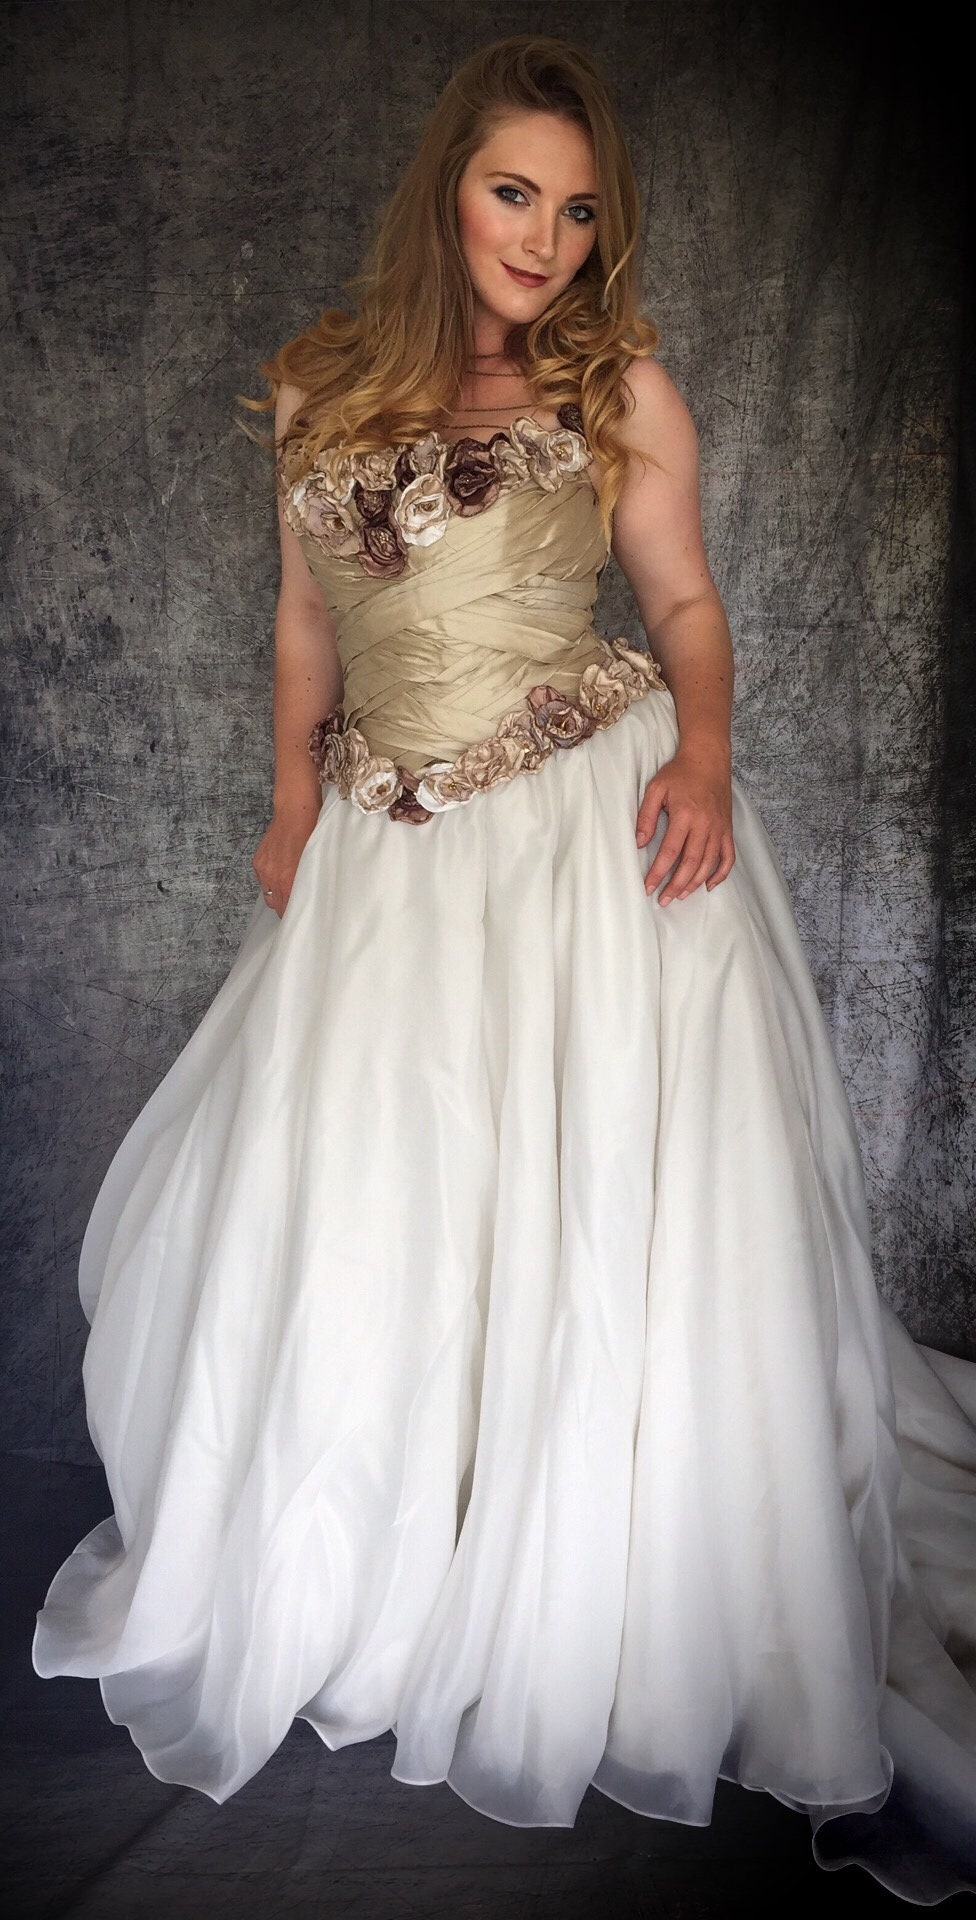 SALE. Alternative steampunk wedding dress  ivory white and gold UK 8 8